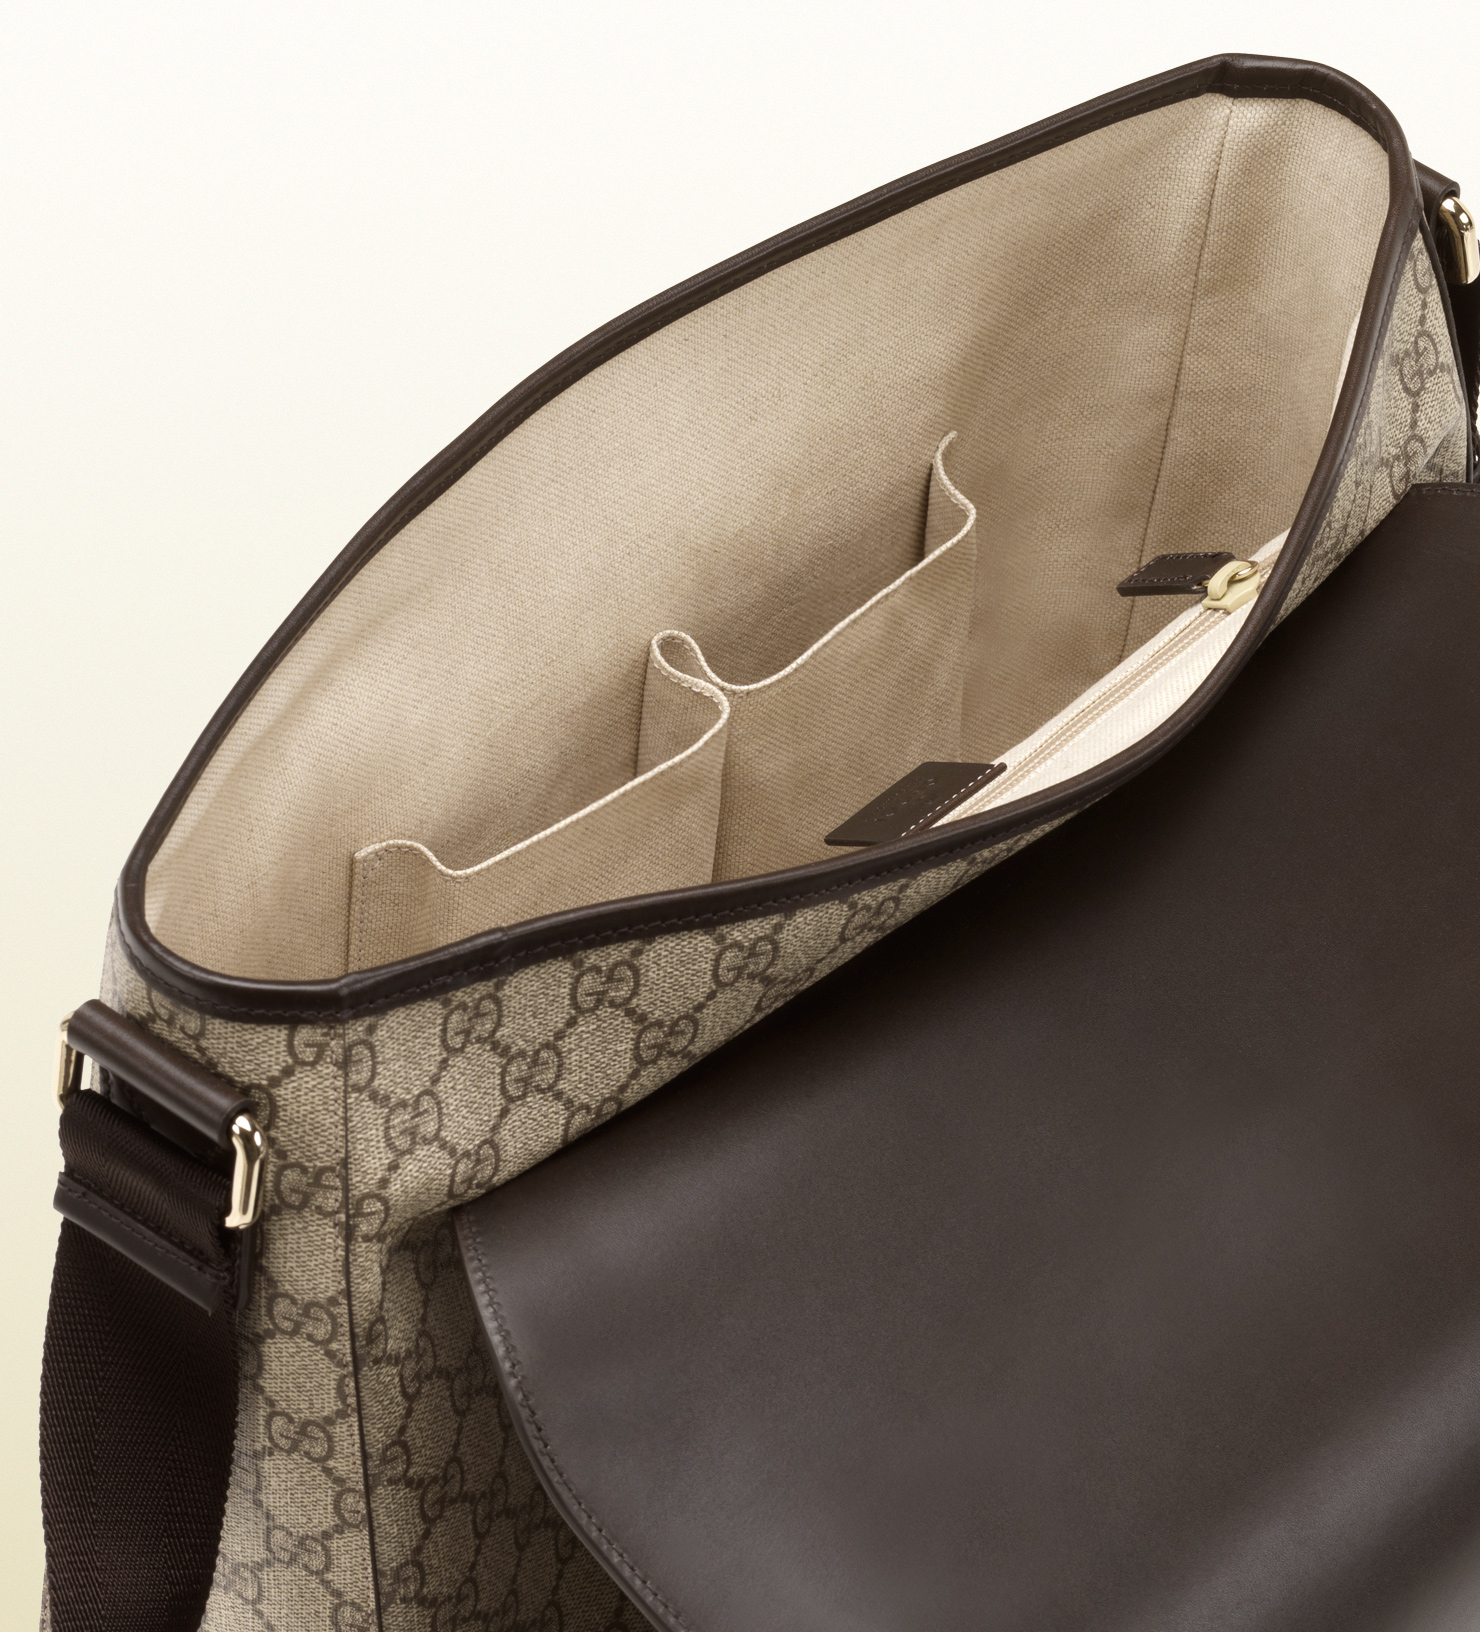 Lyst - Gucci Gg Supreme Canvas Messenger Bag in Brown for Men